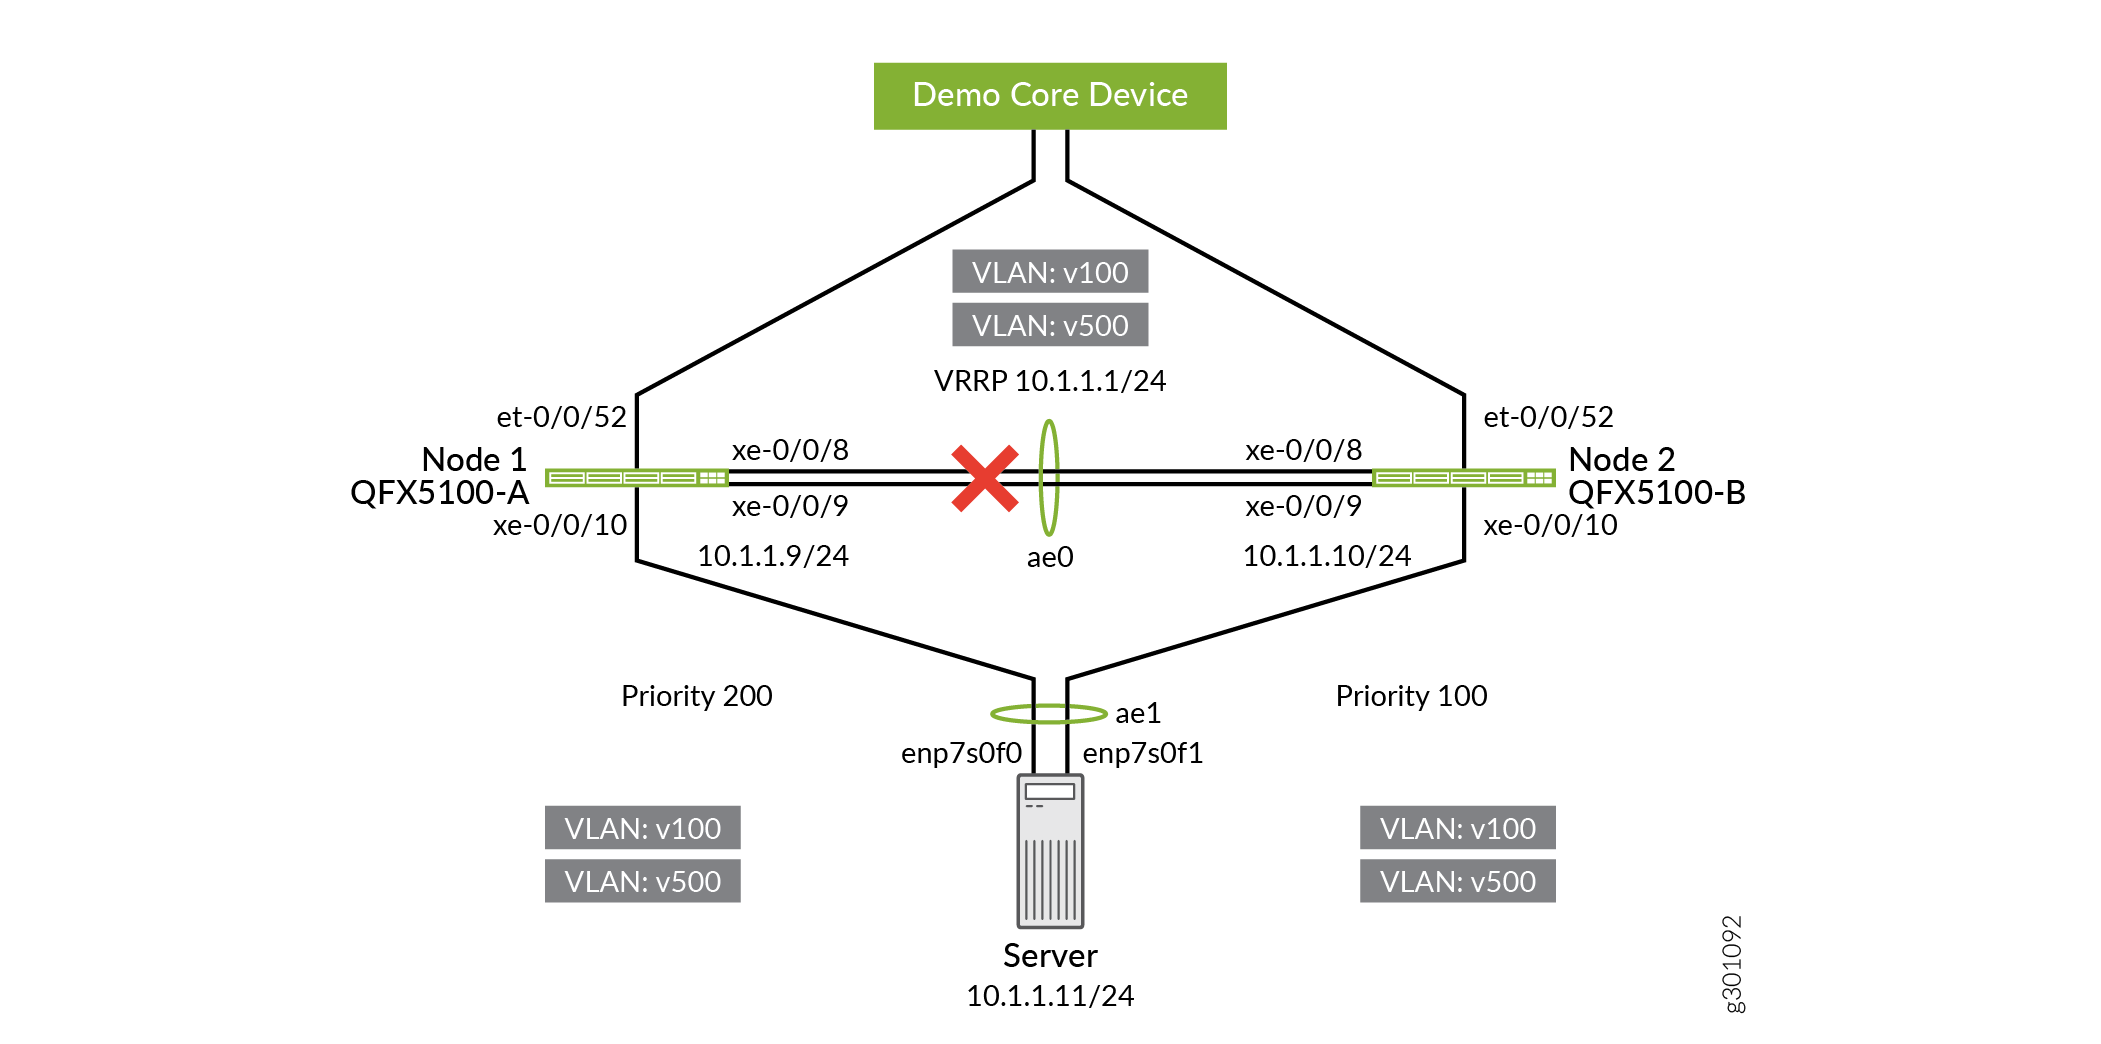 Re-enabling Server-Facing and Uplink Interfaces